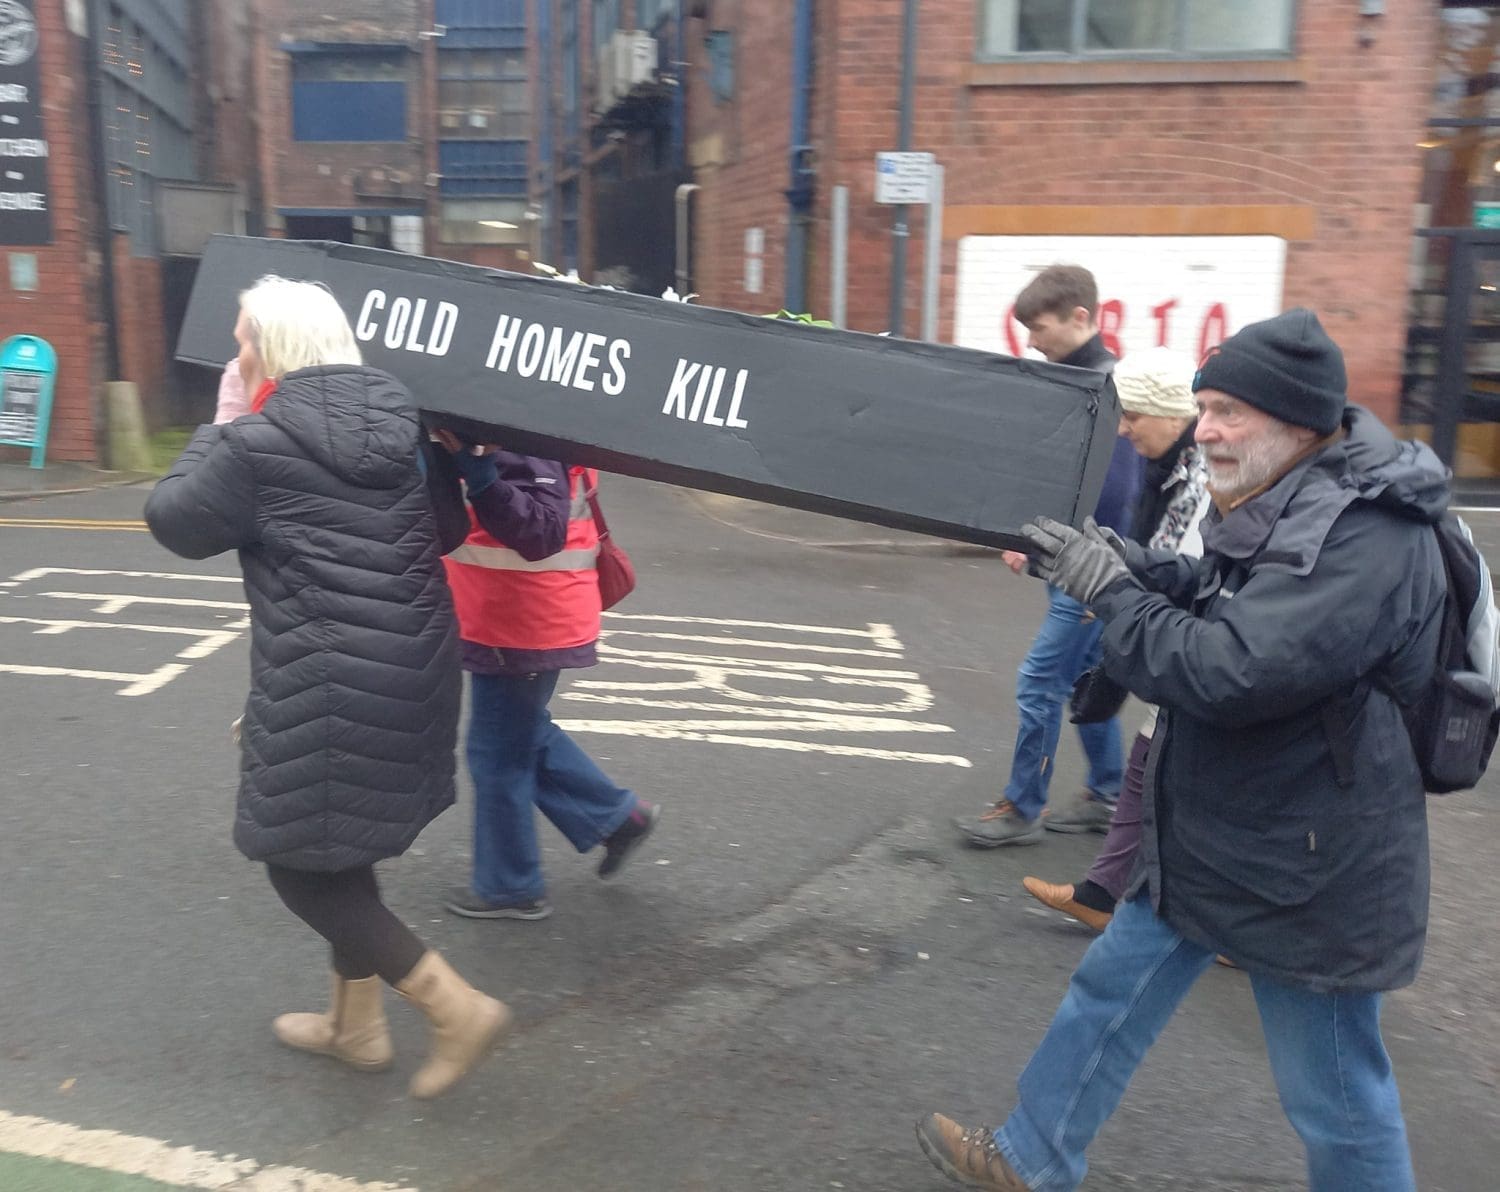 funeral procession in Leeds over energy bills